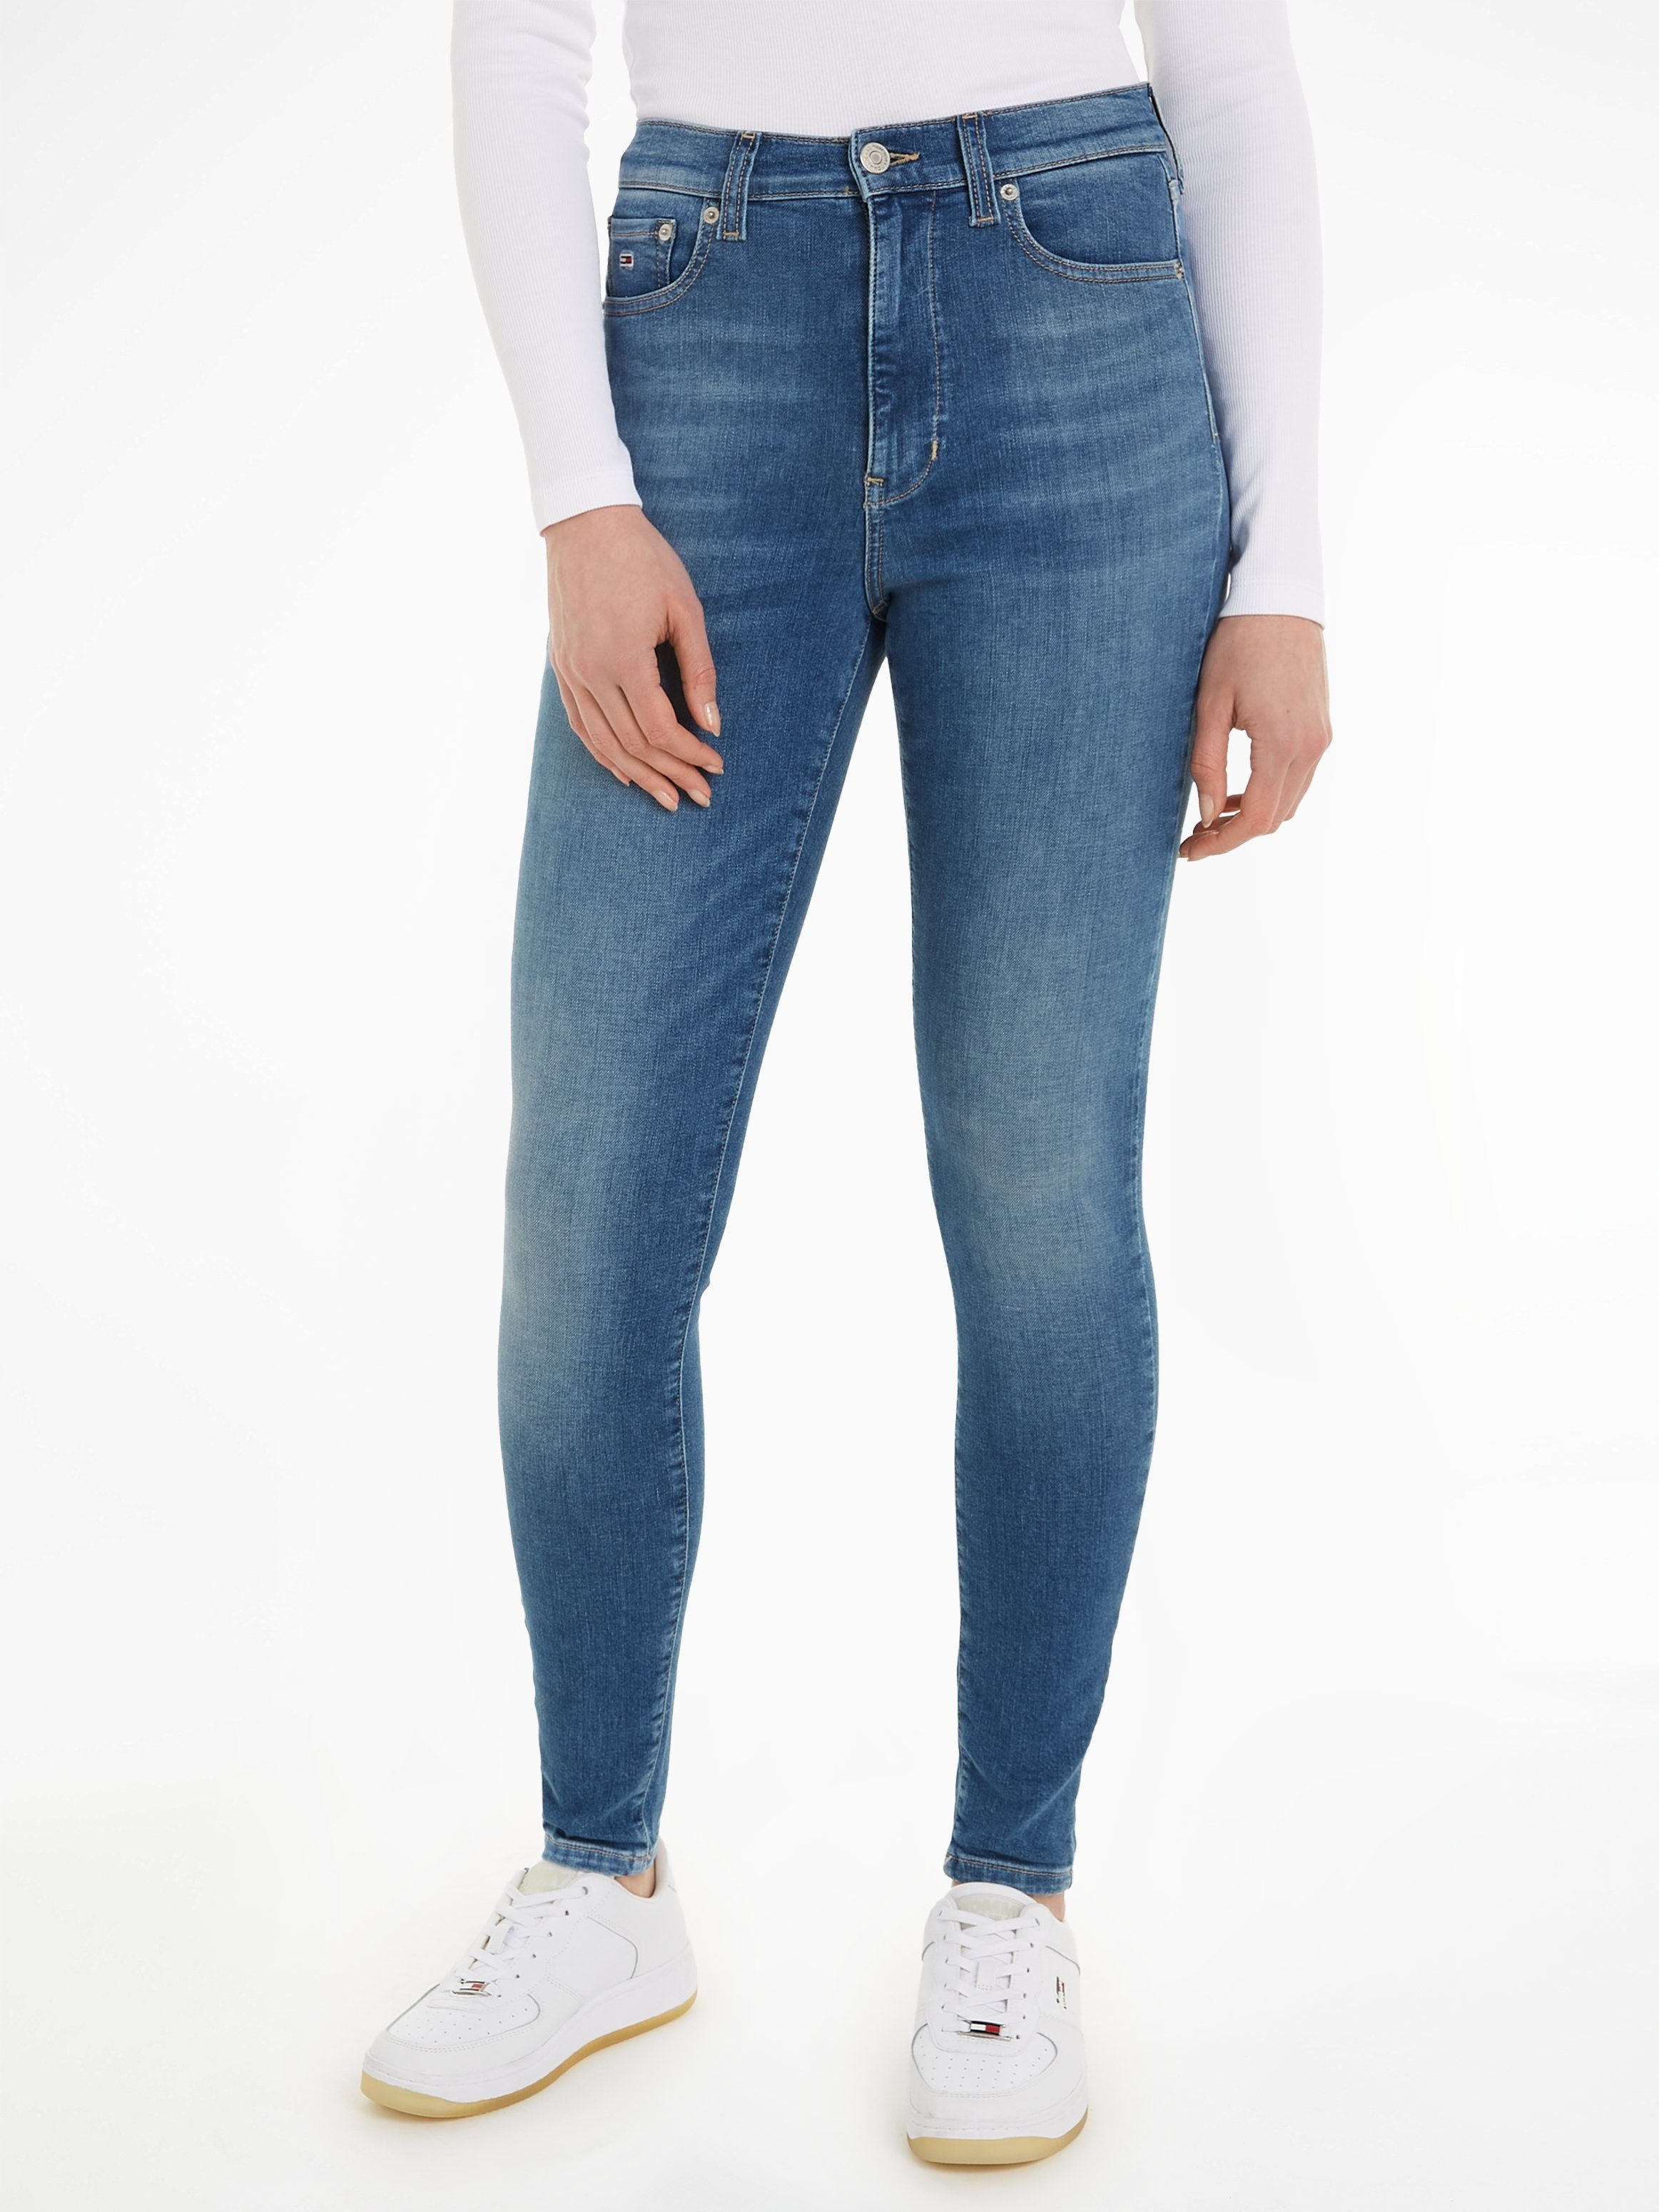 Bequeme Ledermarkenlabel Jeans mit Sylvia Tommy Medium2 Jeans Denim